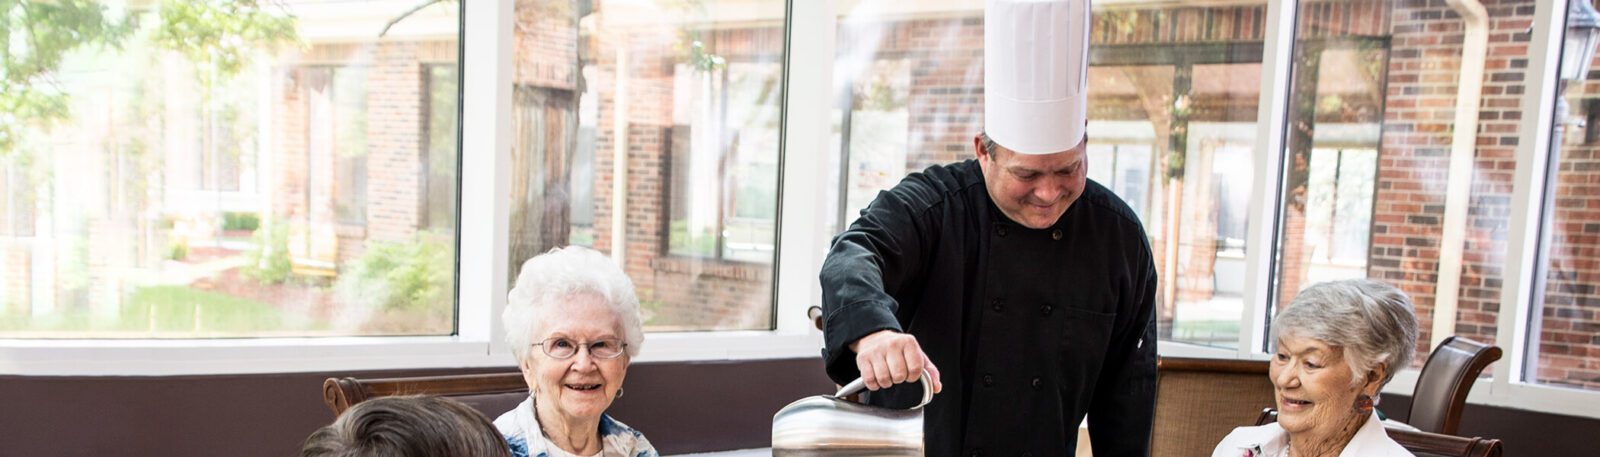 Chef serving the elderly